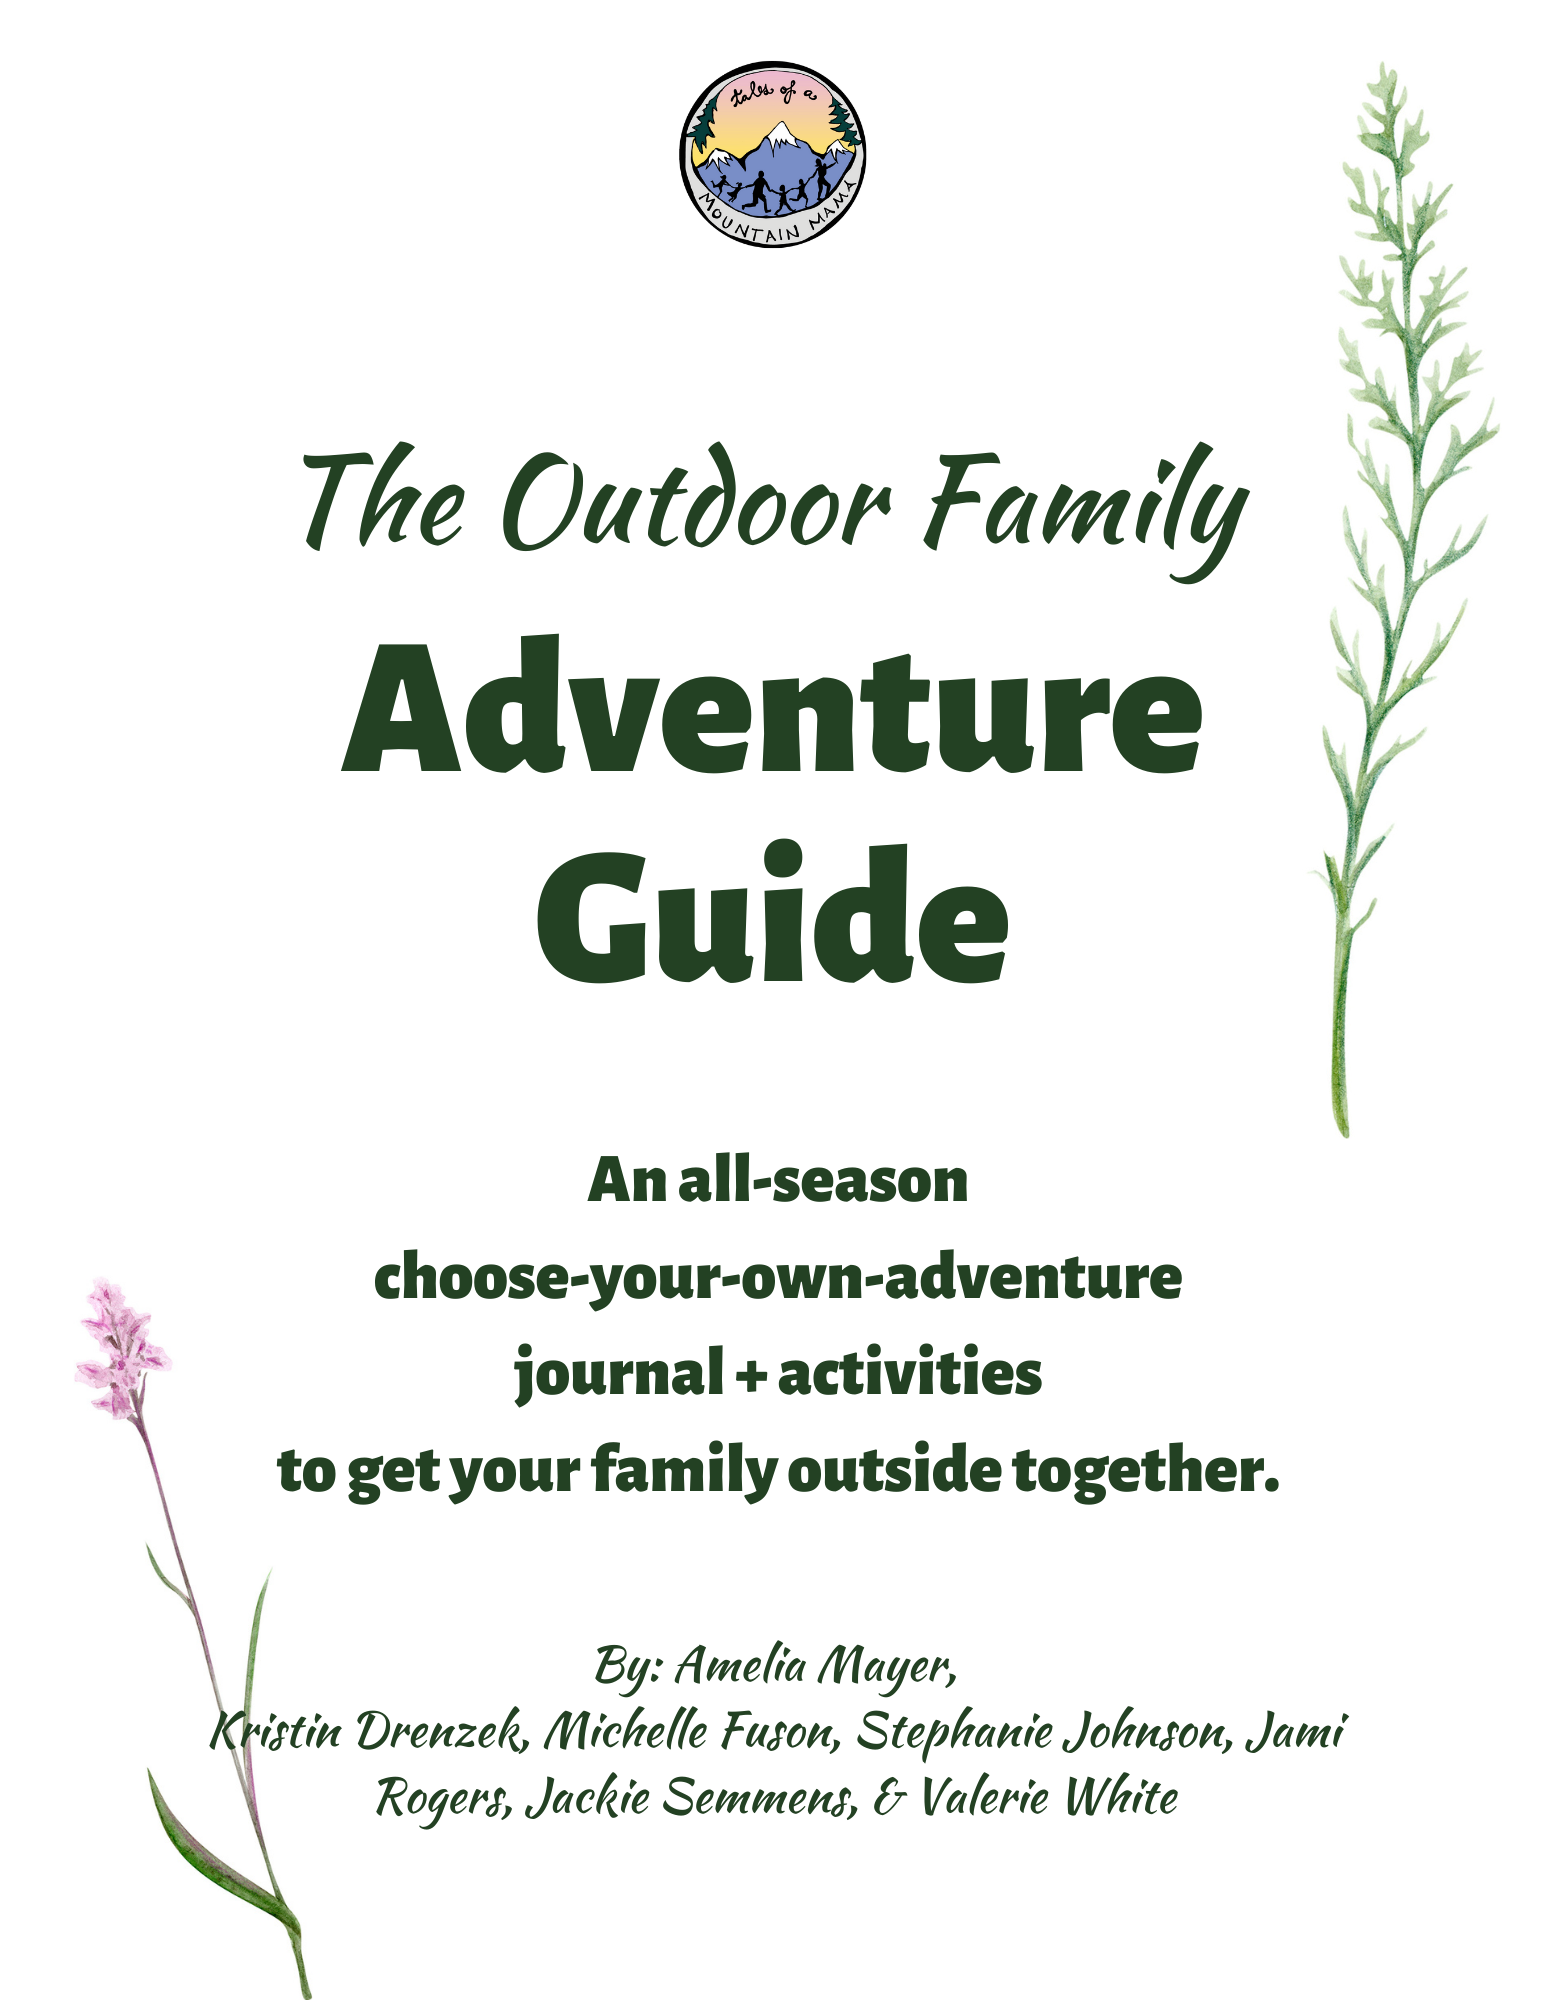 Family Adventure Journal